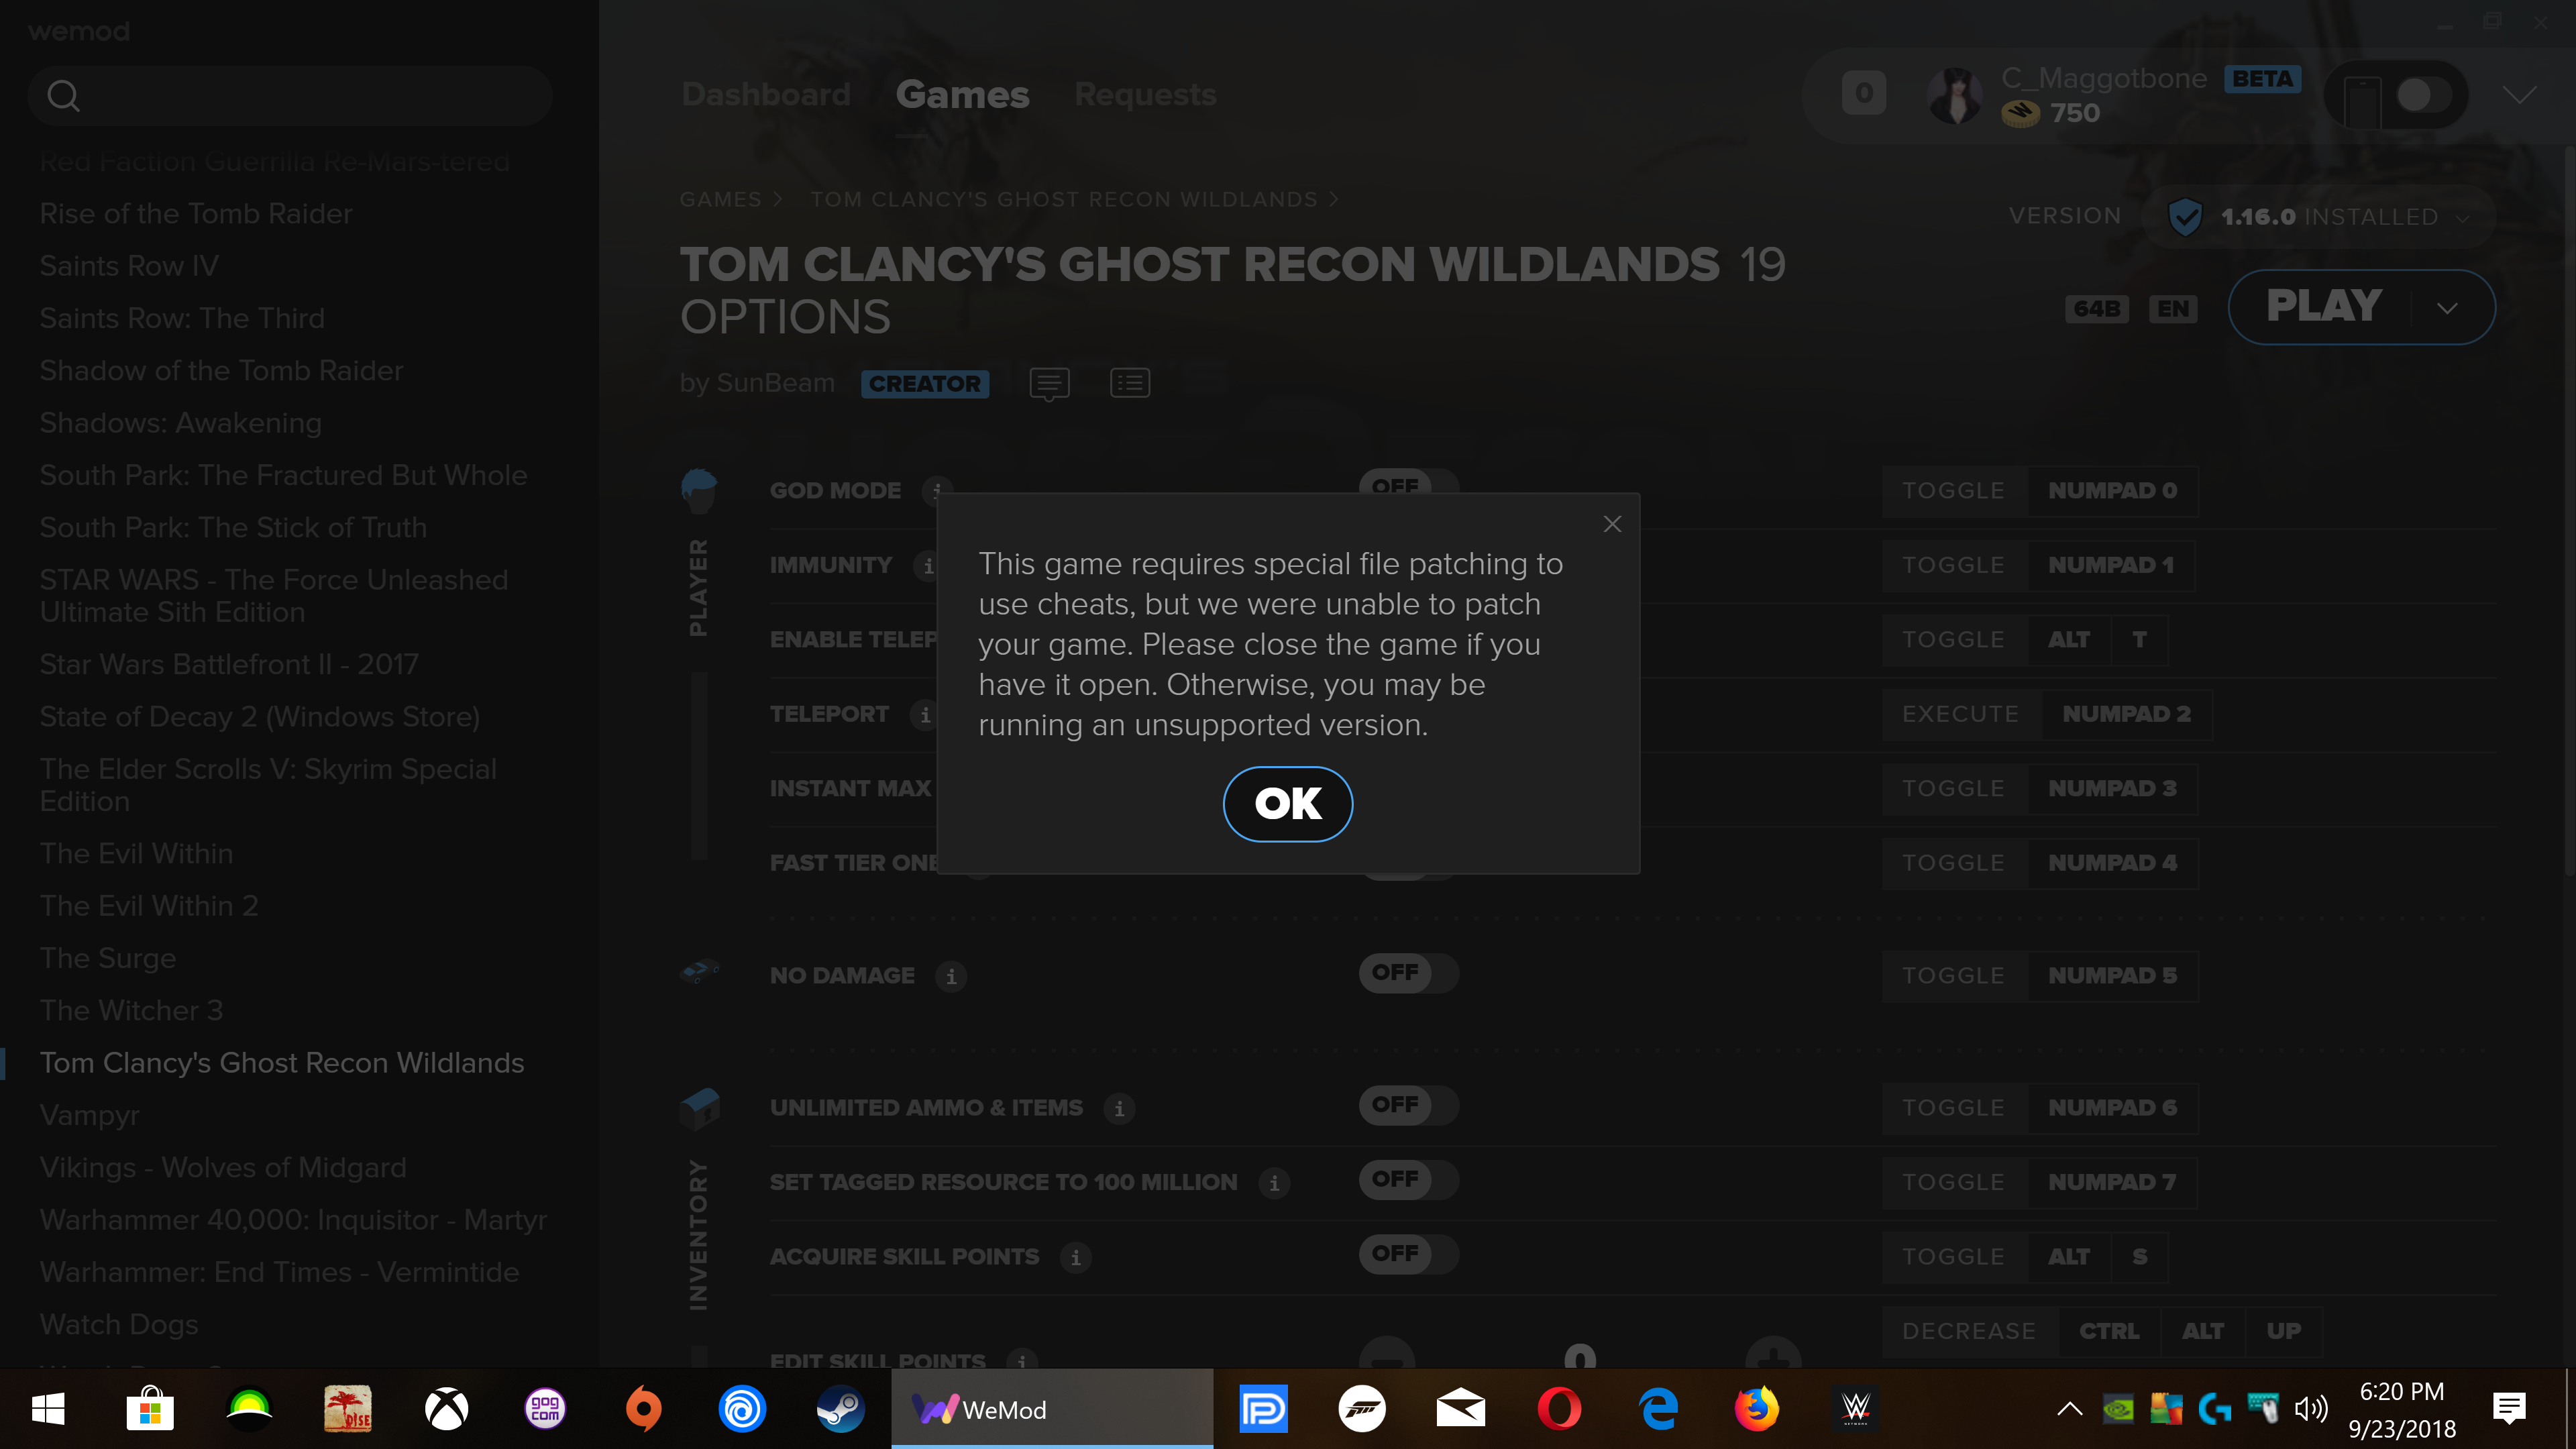 tom clancy ghost recon wildlands cheat codes